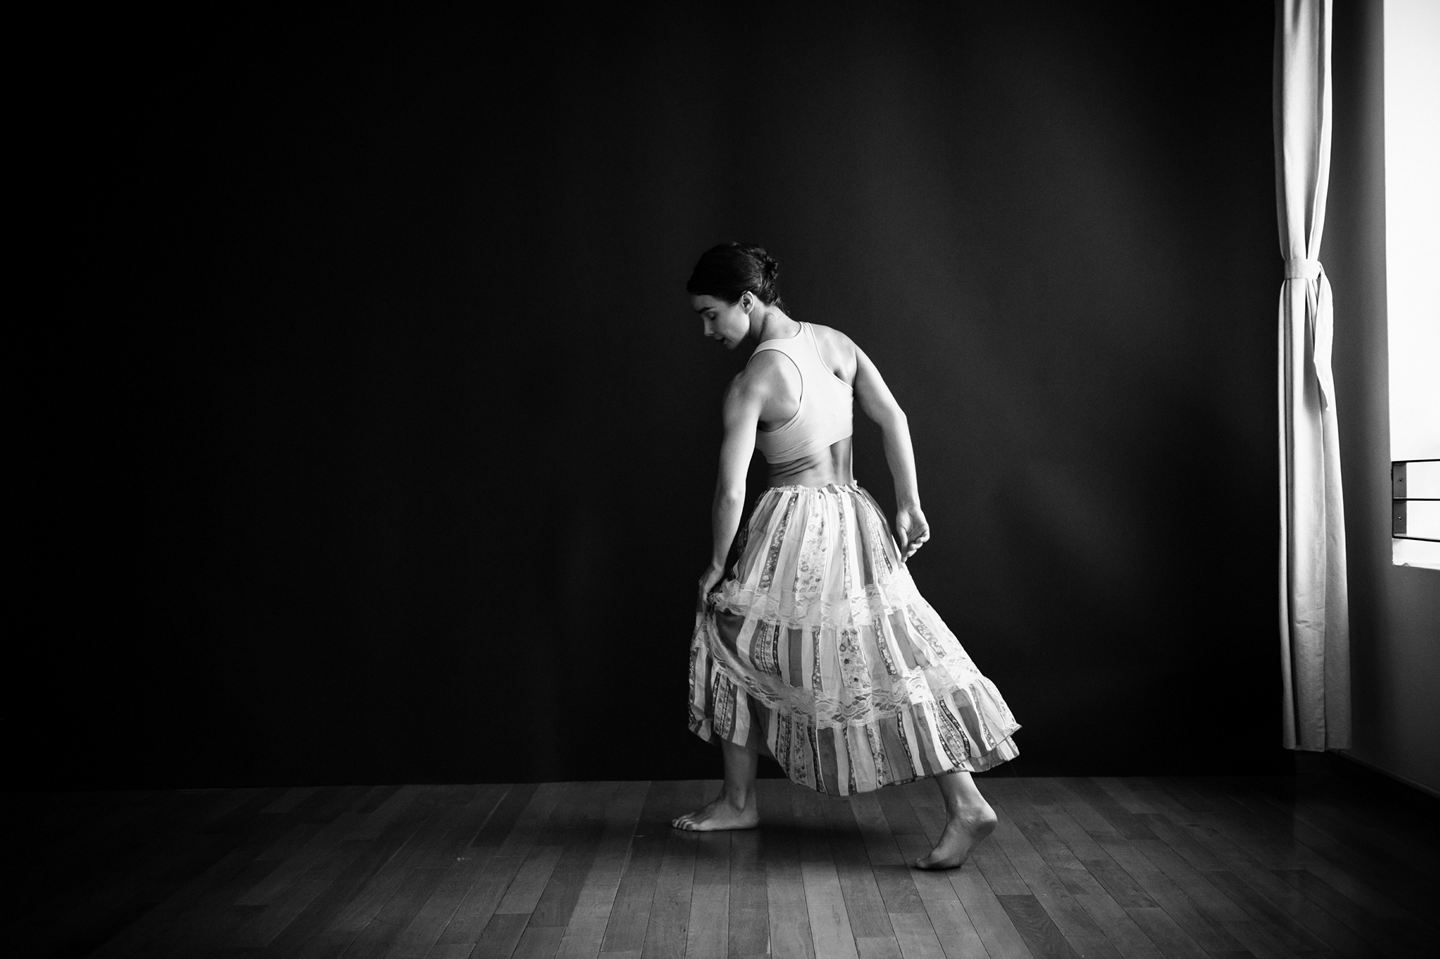 Los Angeles Dance Portrait Photo - Olga Sokolova - by Tommy Xing Photography 19.JPG